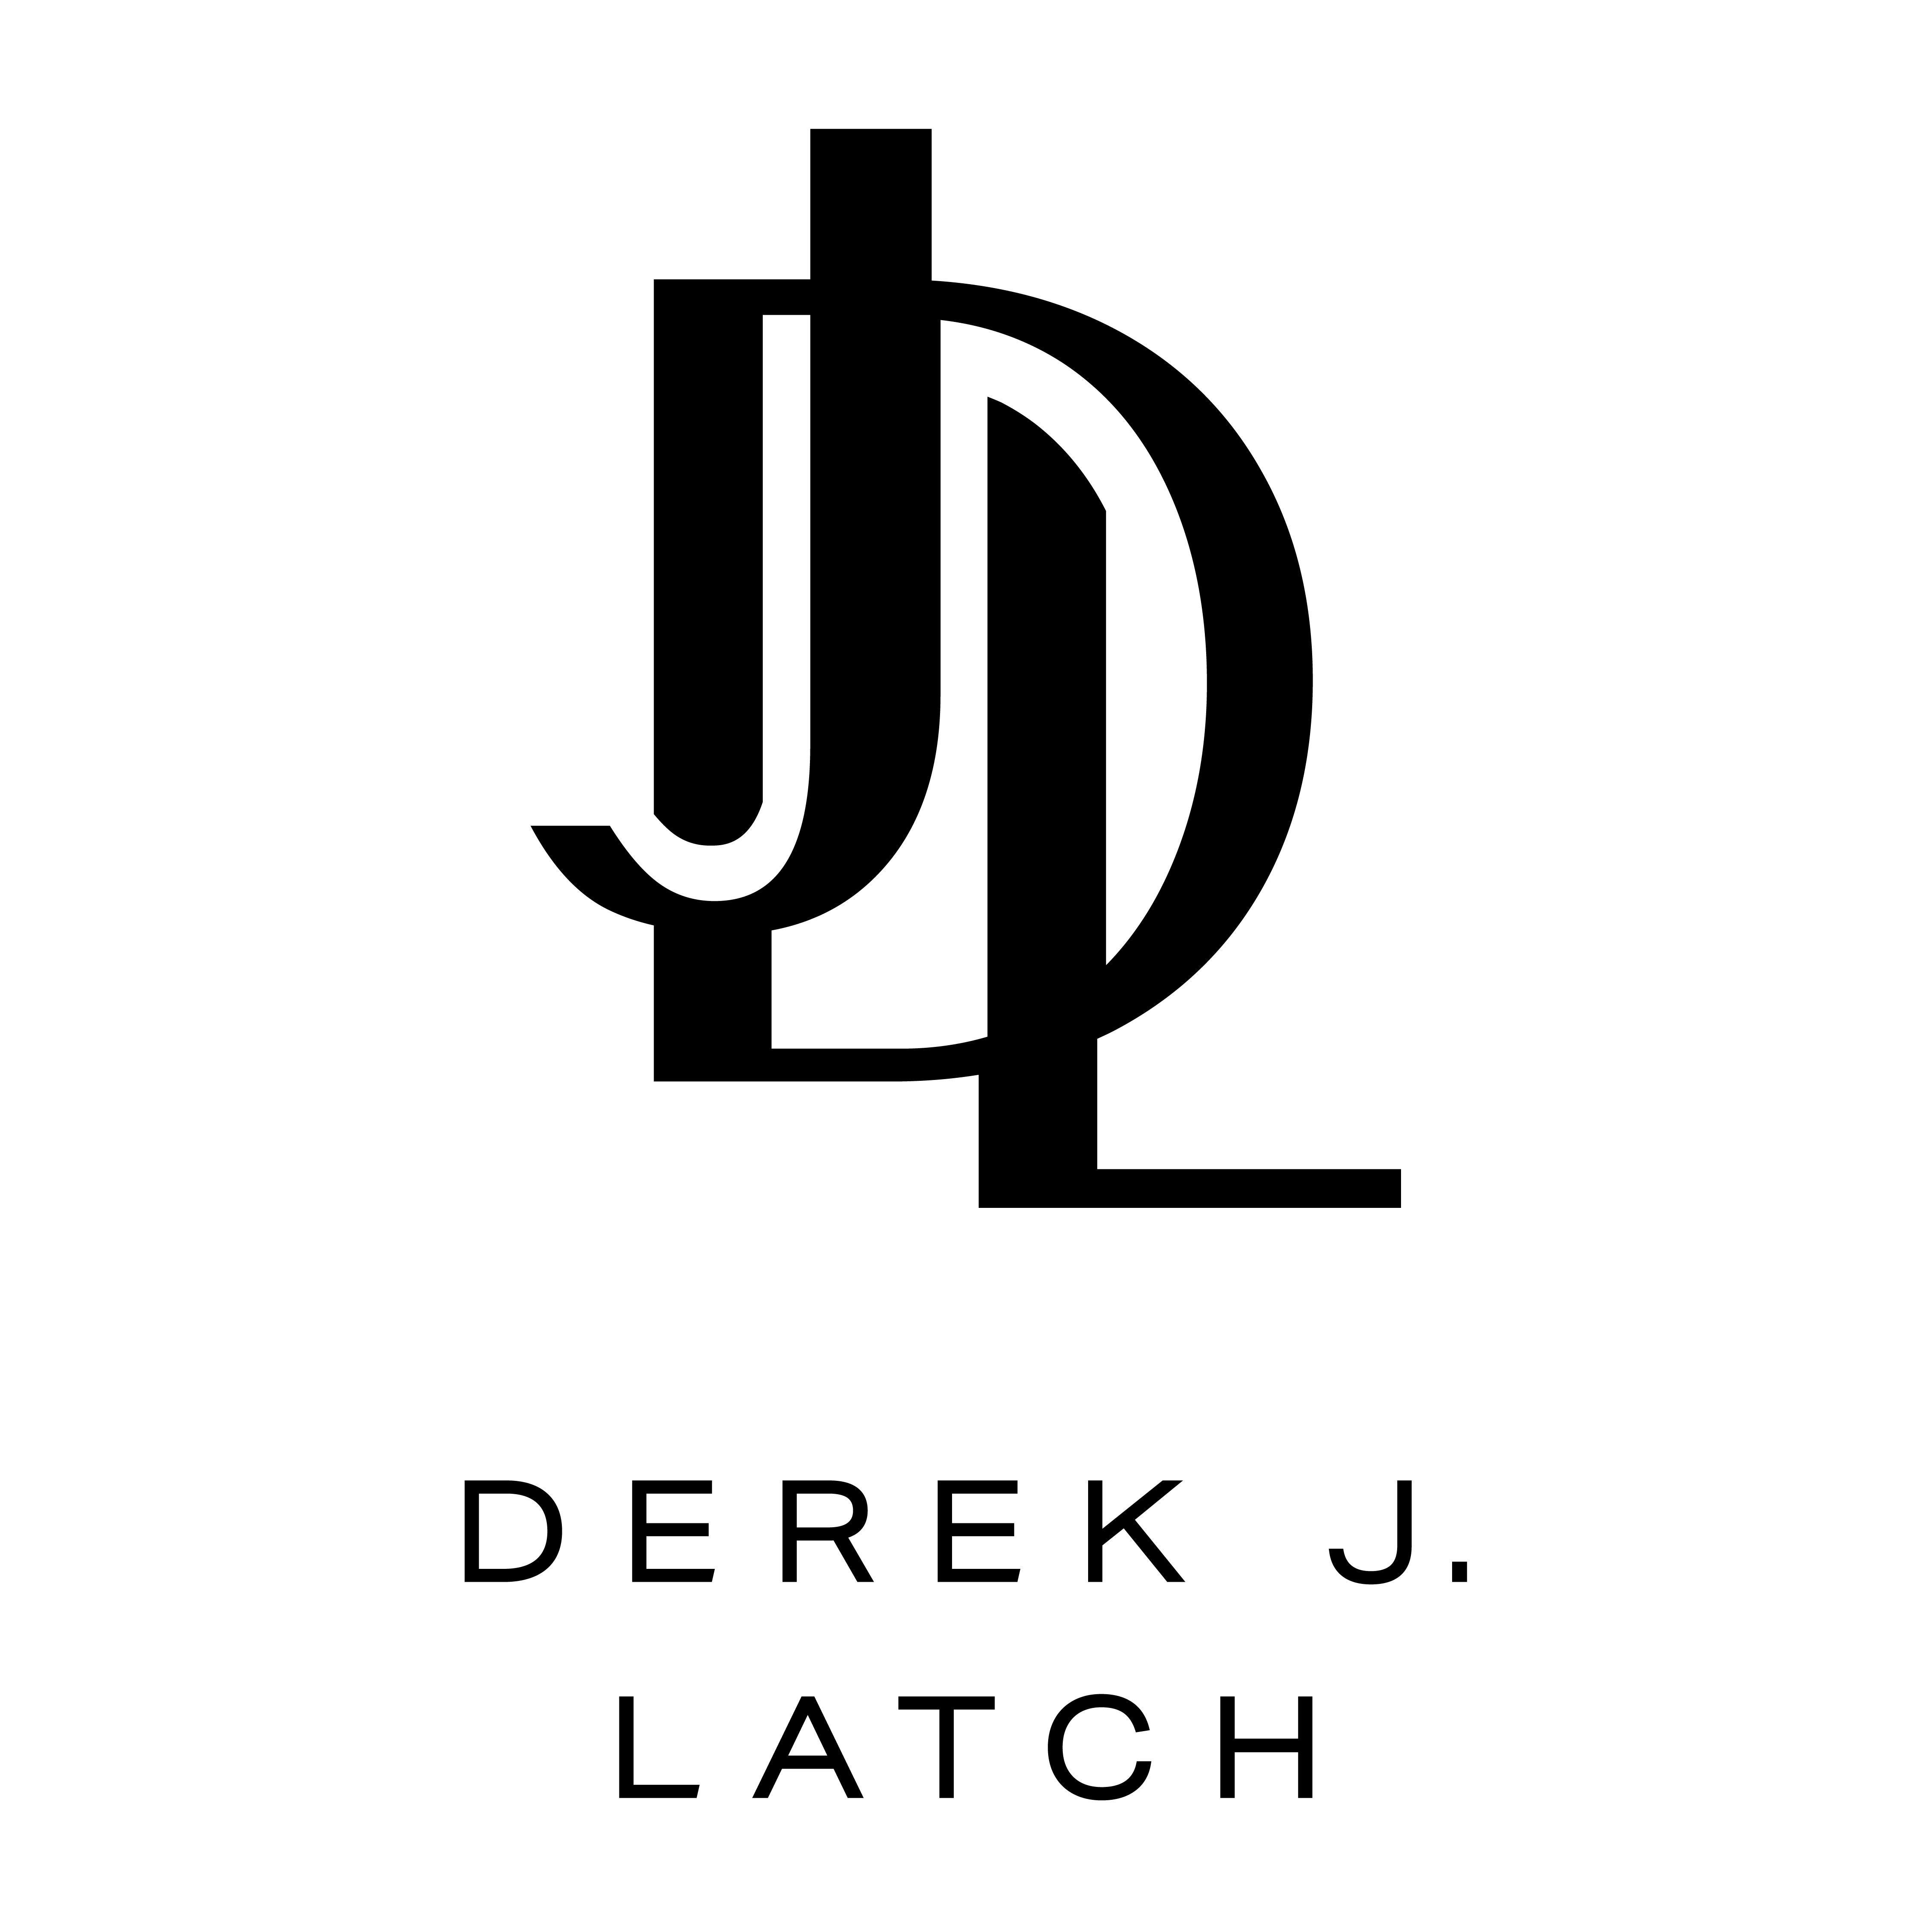 The logo of Derek J. Latch